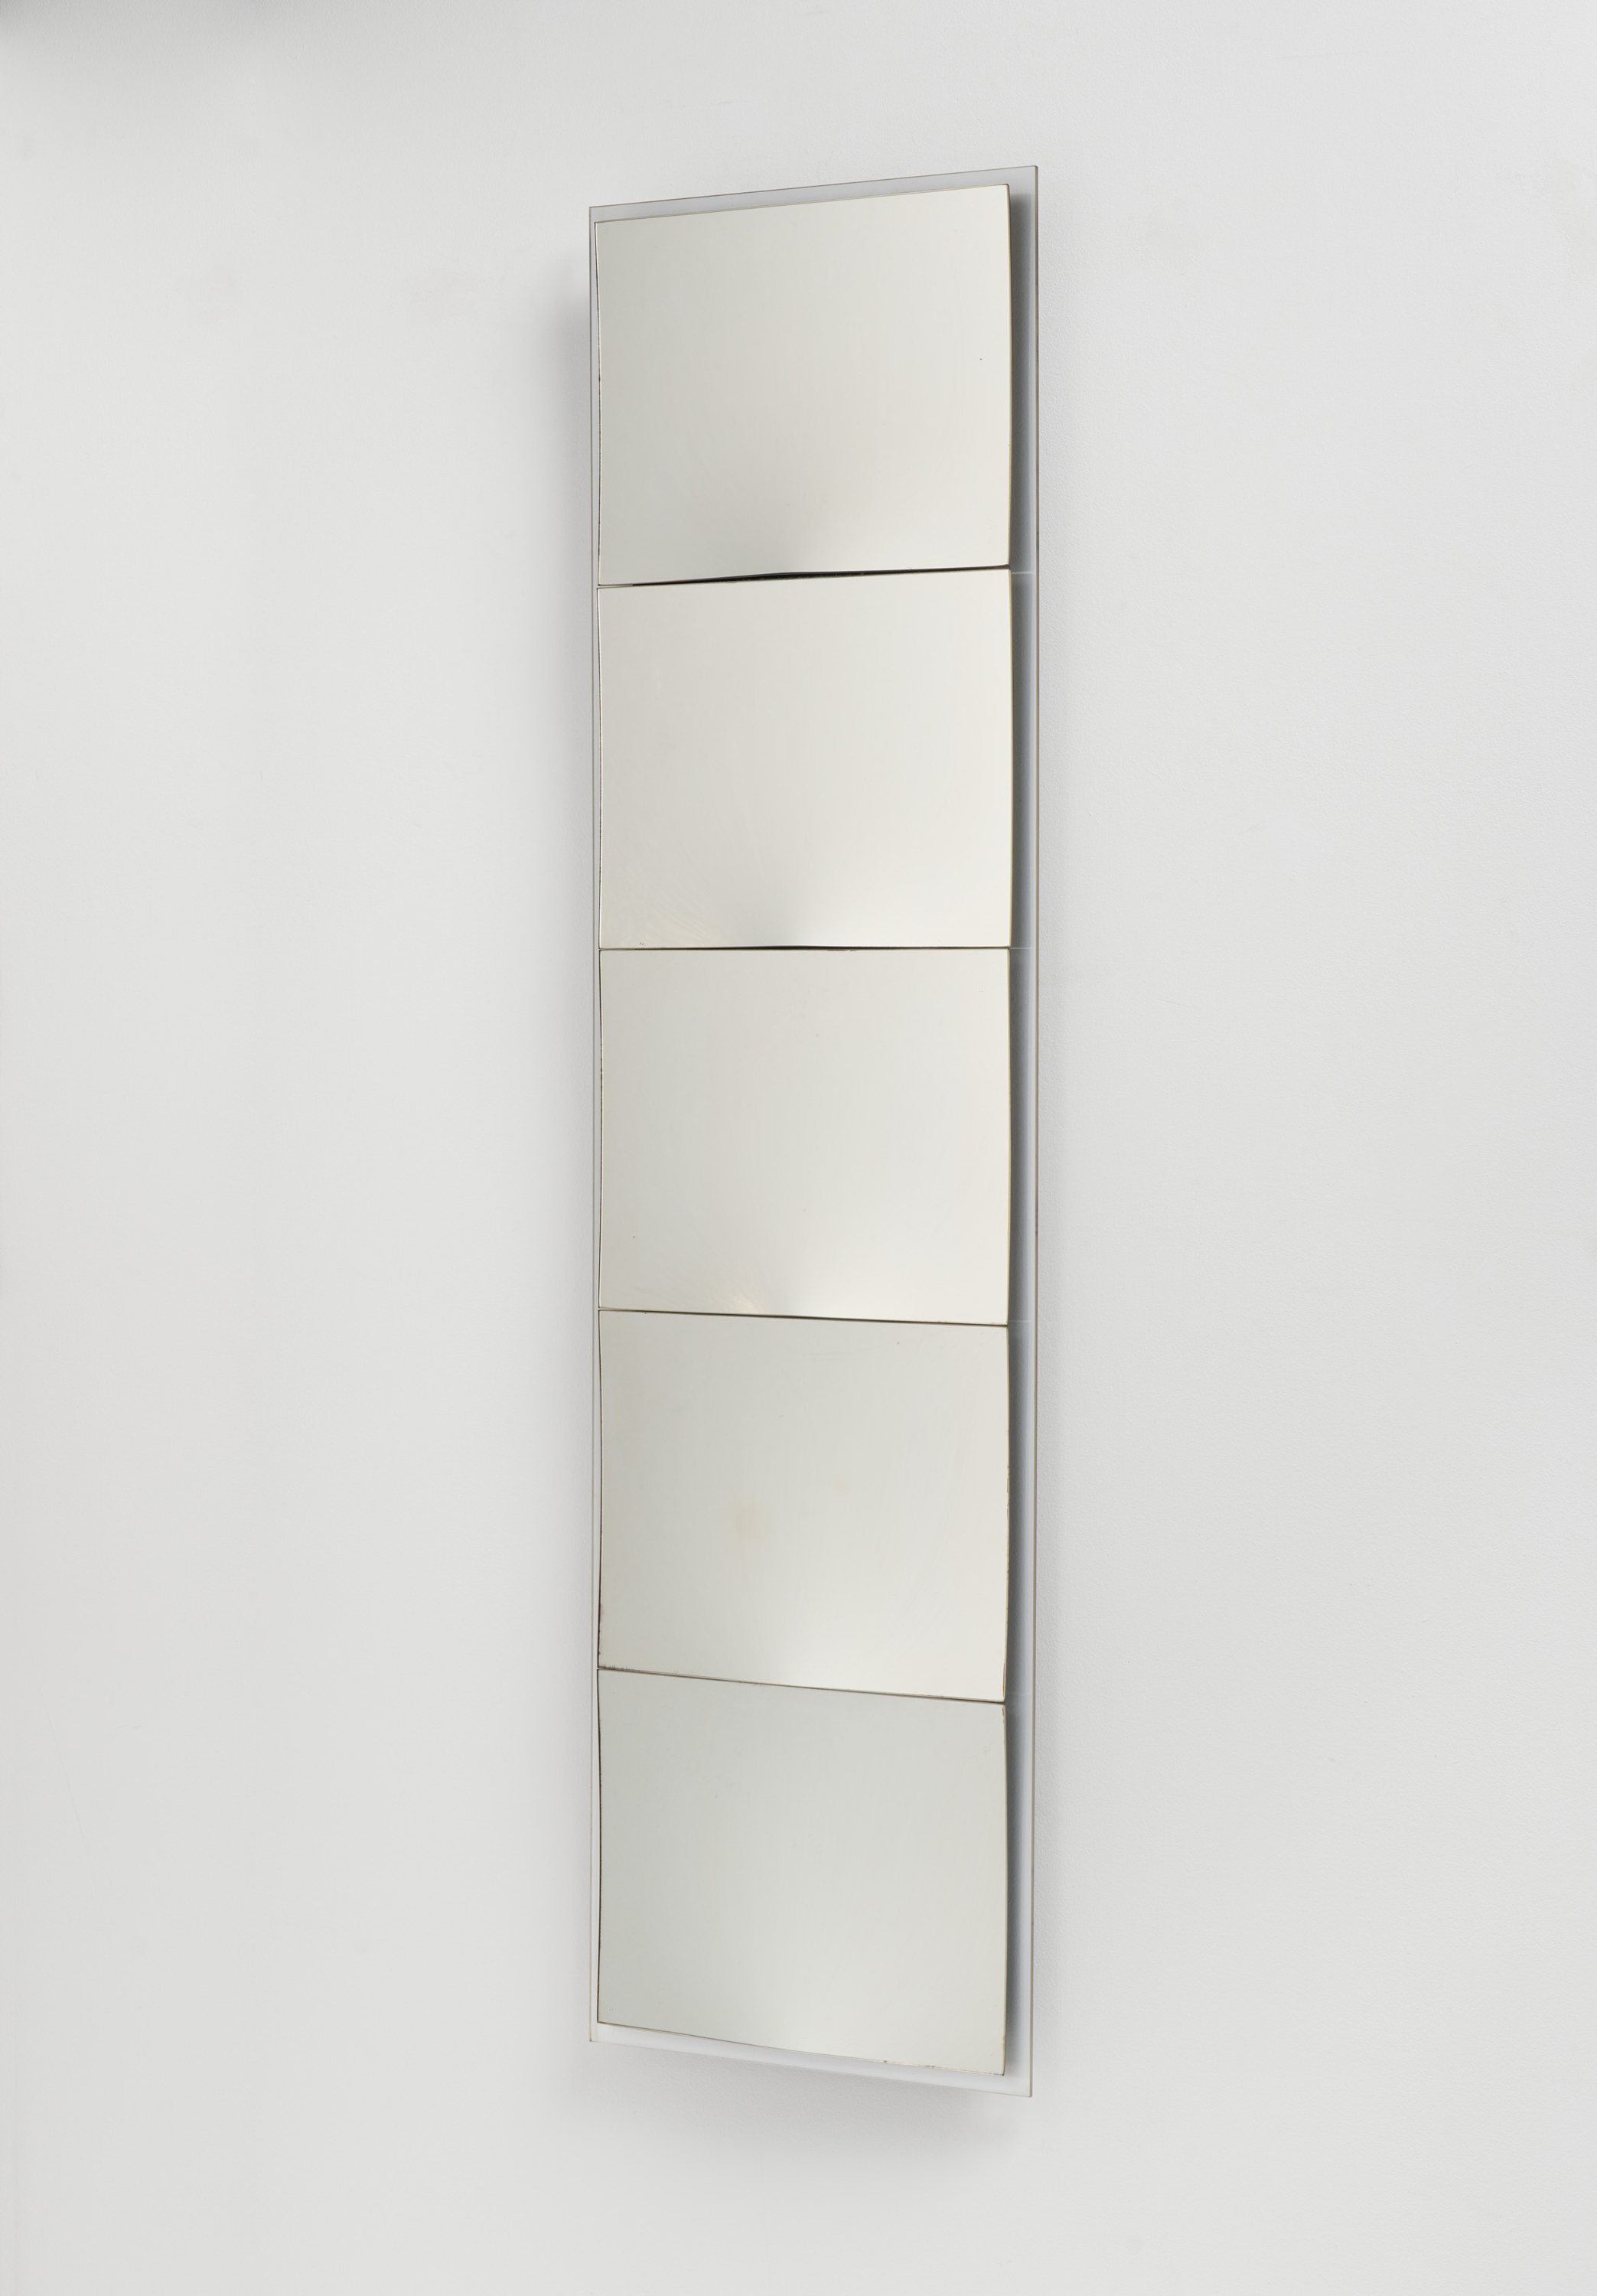 Victor Bonato - glas-spiegel-verformung XXI86 Lamelle, 76841-3, Van Ham Kunstauktionen